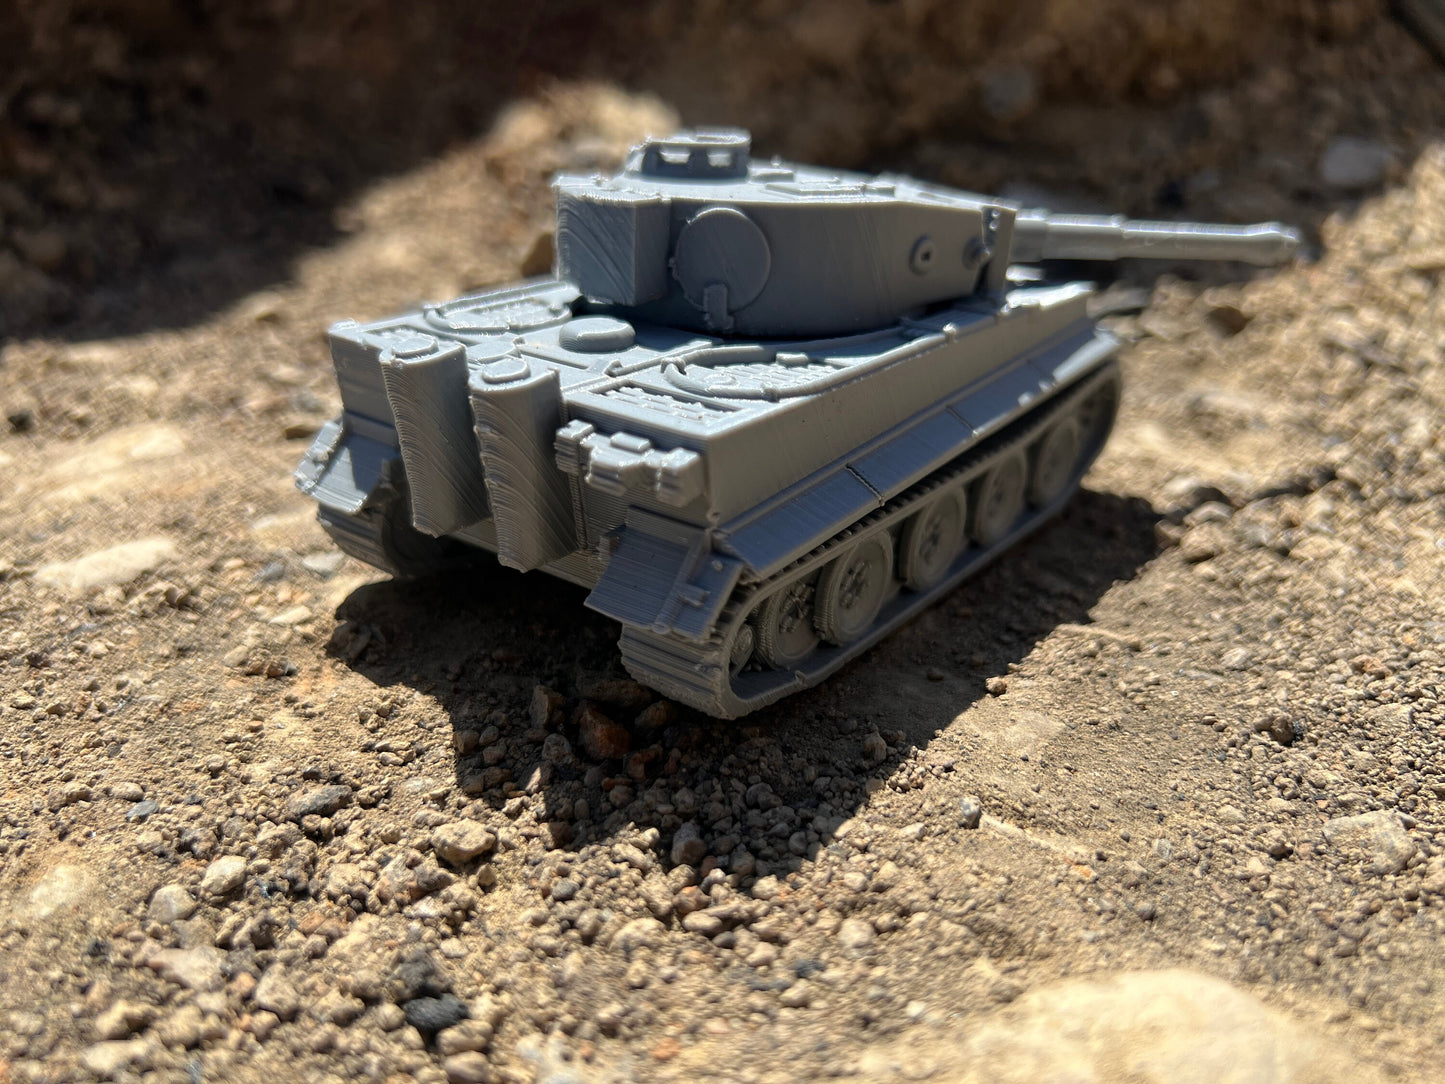 Tiger 1, Panzerkampfwagen, Warhammer, Modern warfare, Tabletop terrain, WW2, WWII,